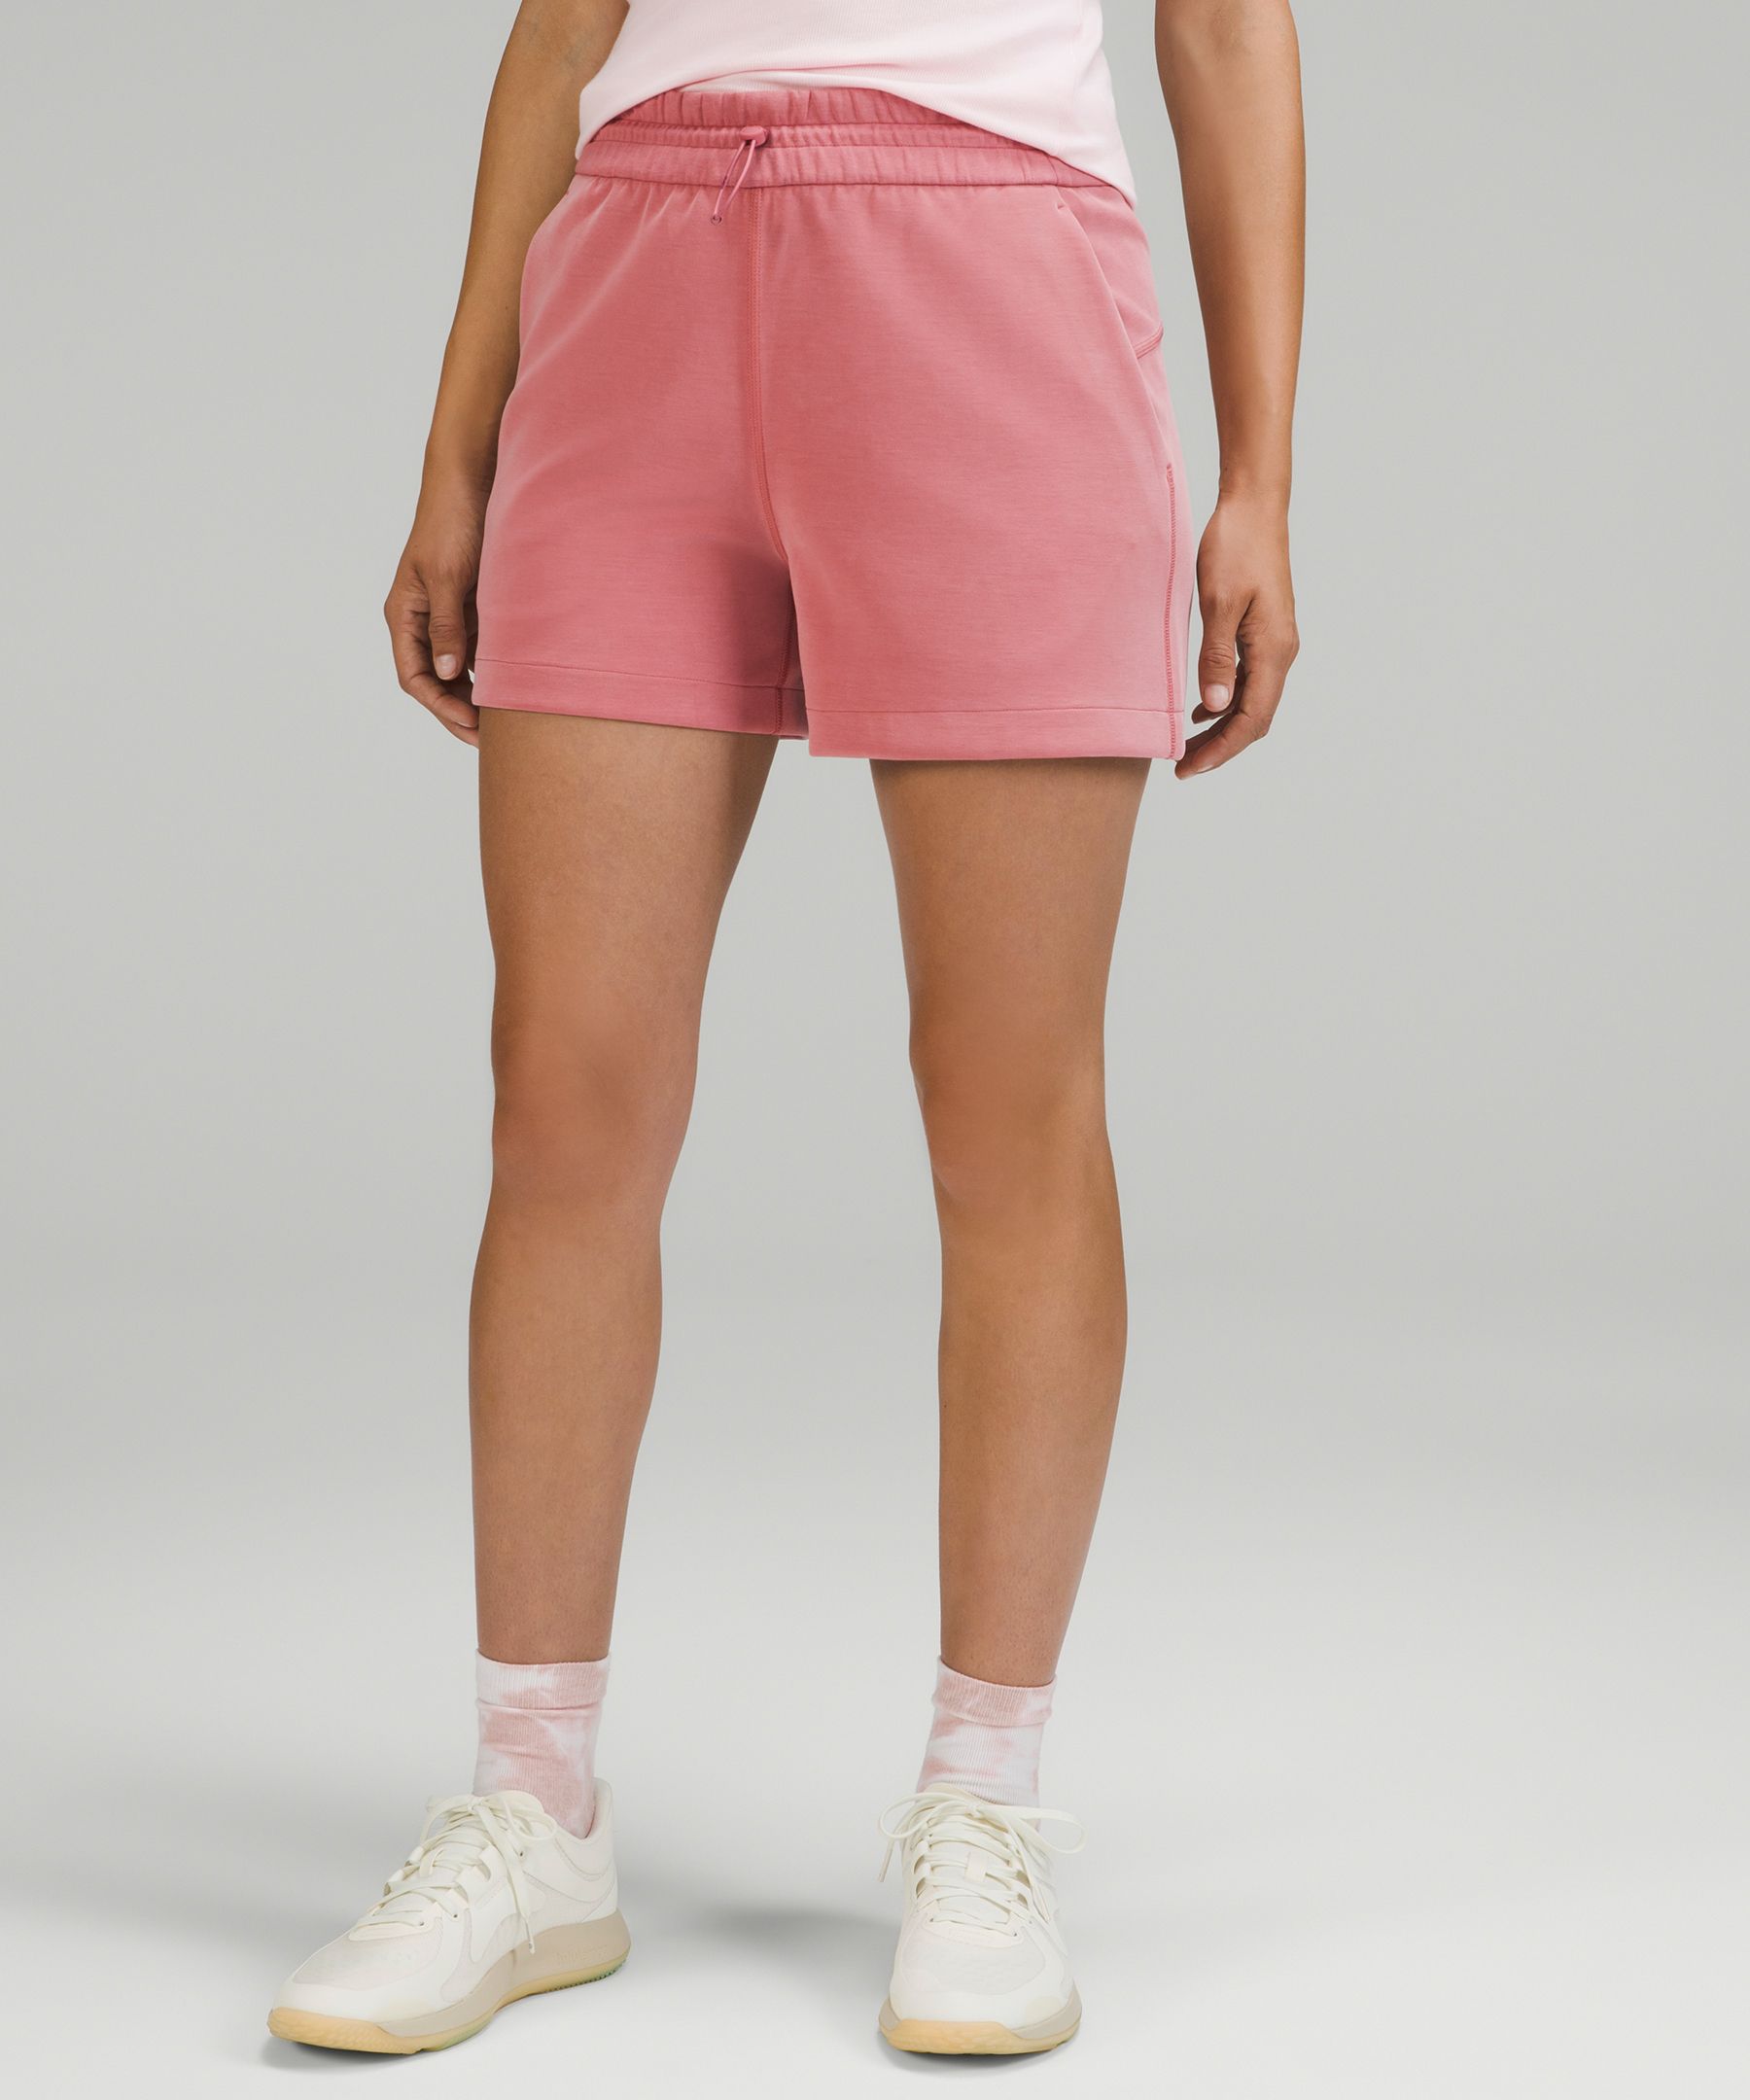 Lululemon Softstreme High-rise Shorts 4" In Brier Rose